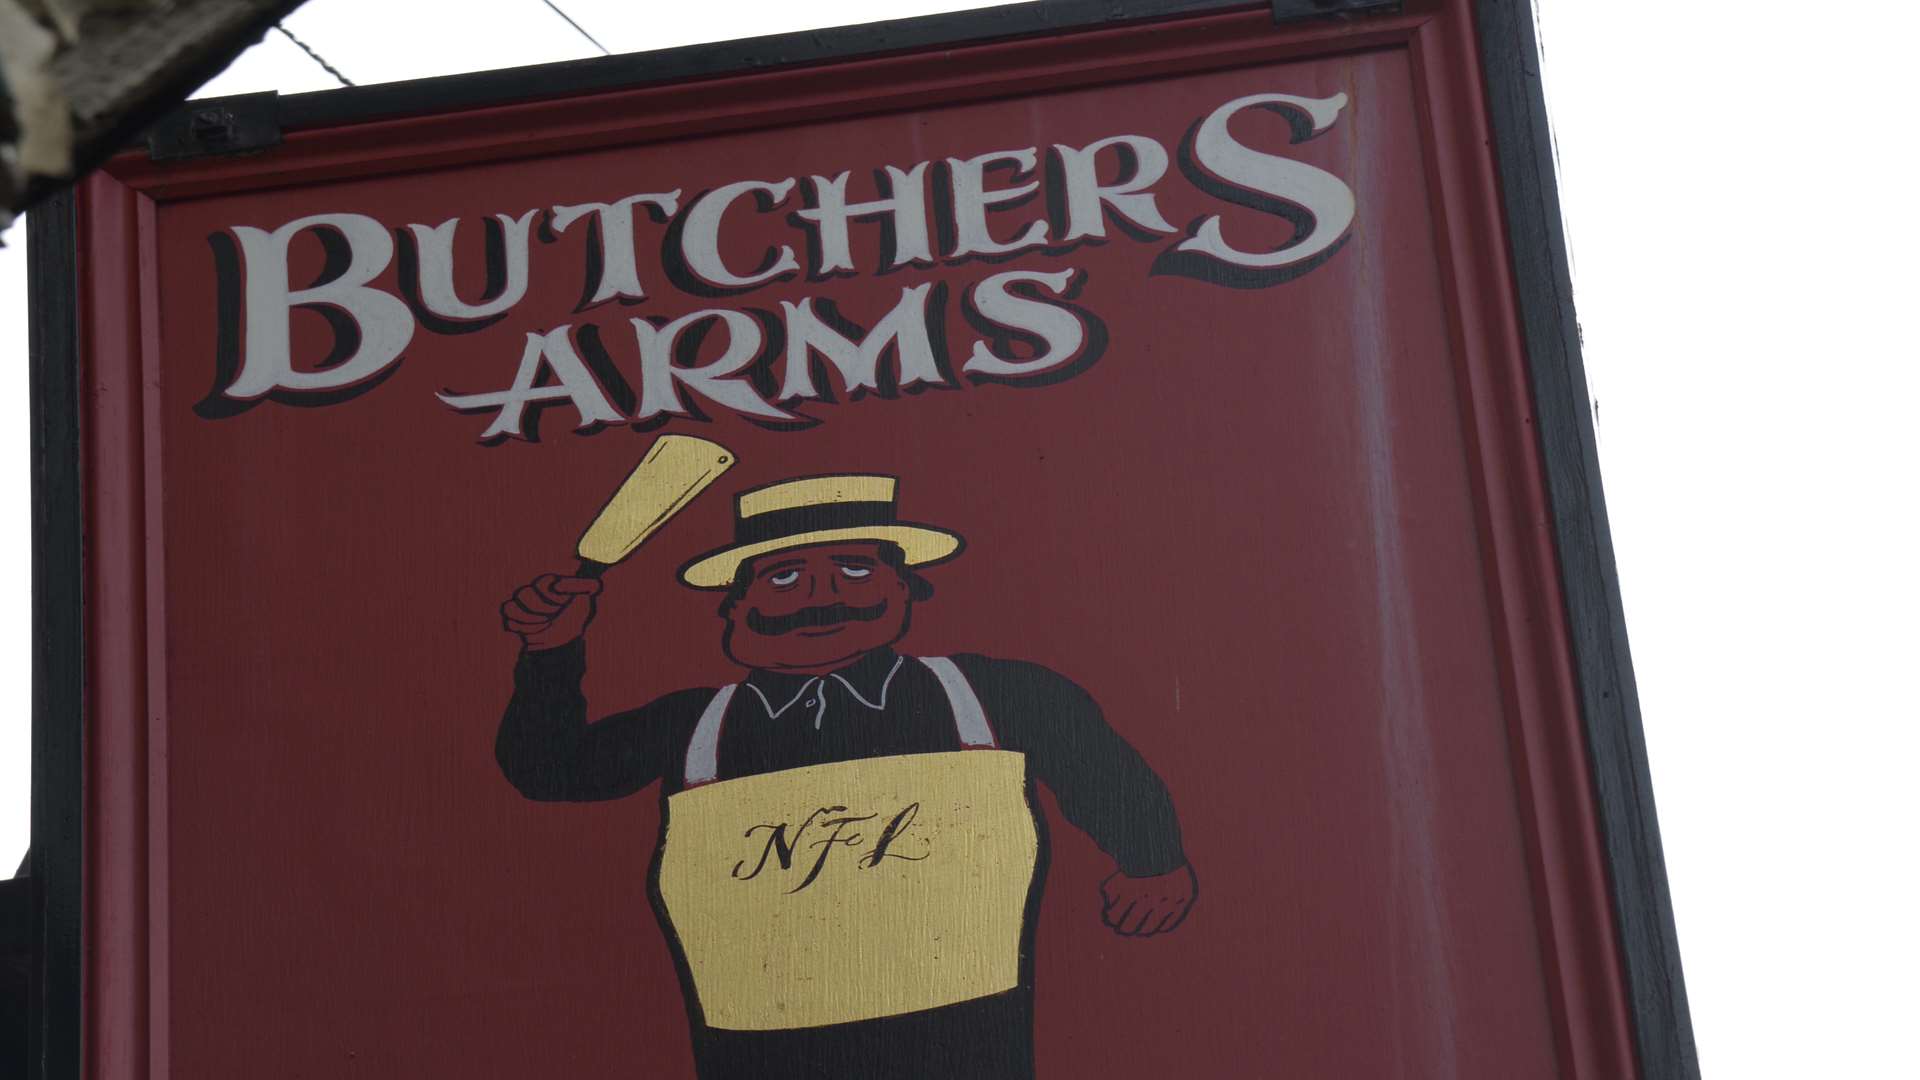 The Butcher's Arms pub sign